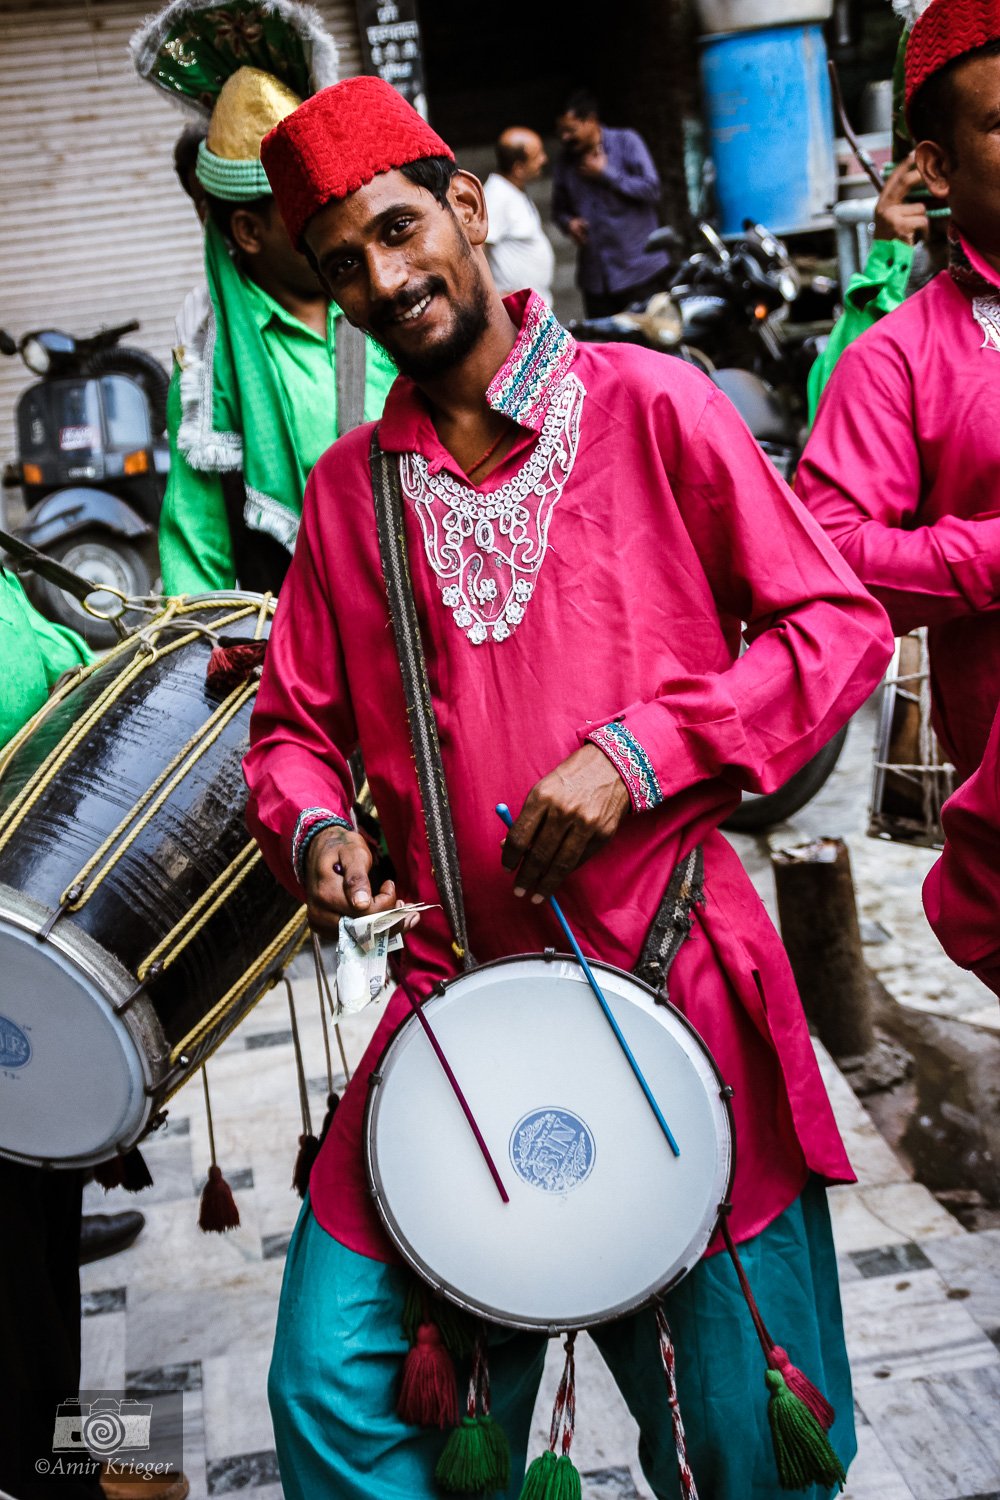  Amritsar, Punjab, India 